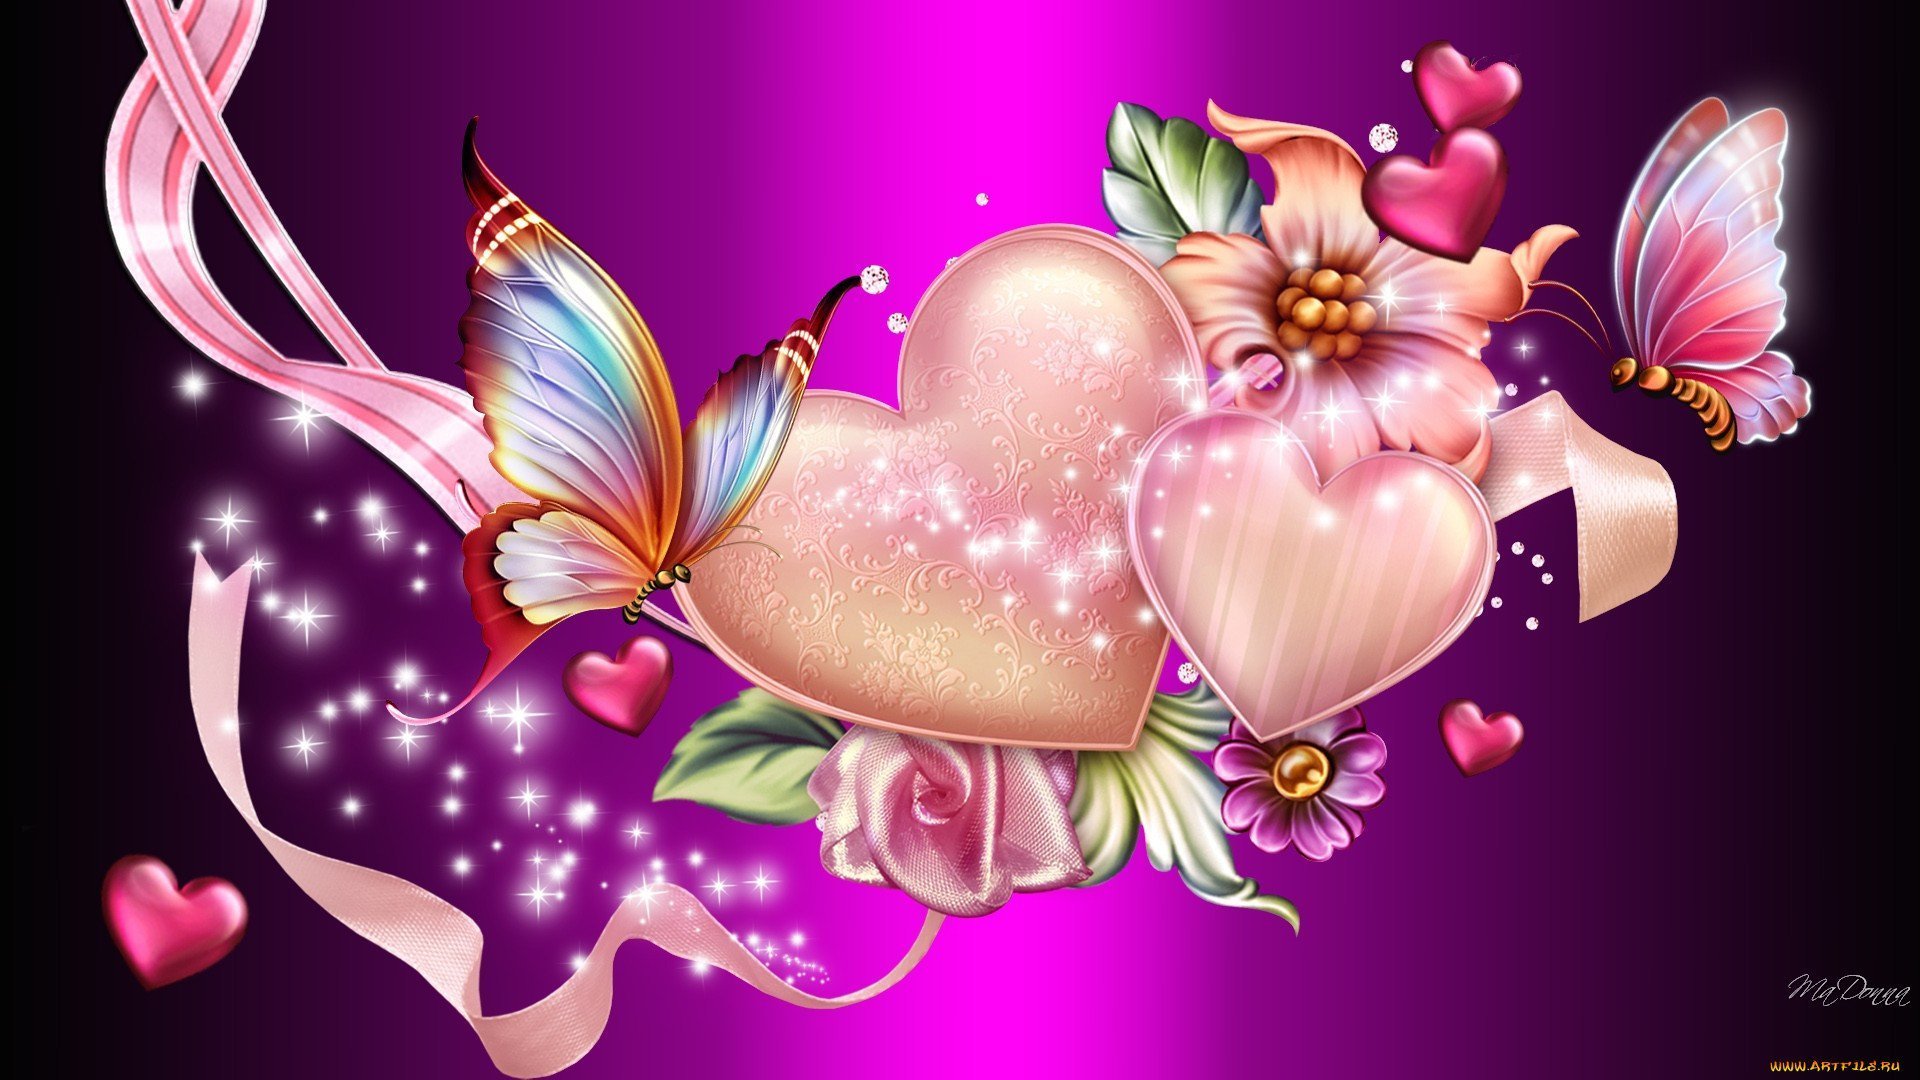 Картинки на телефон на заставку красивые живые. Цветы сердечки. Сердечки цветочки. Бабочки-сердечки. Бабочки цветочки.